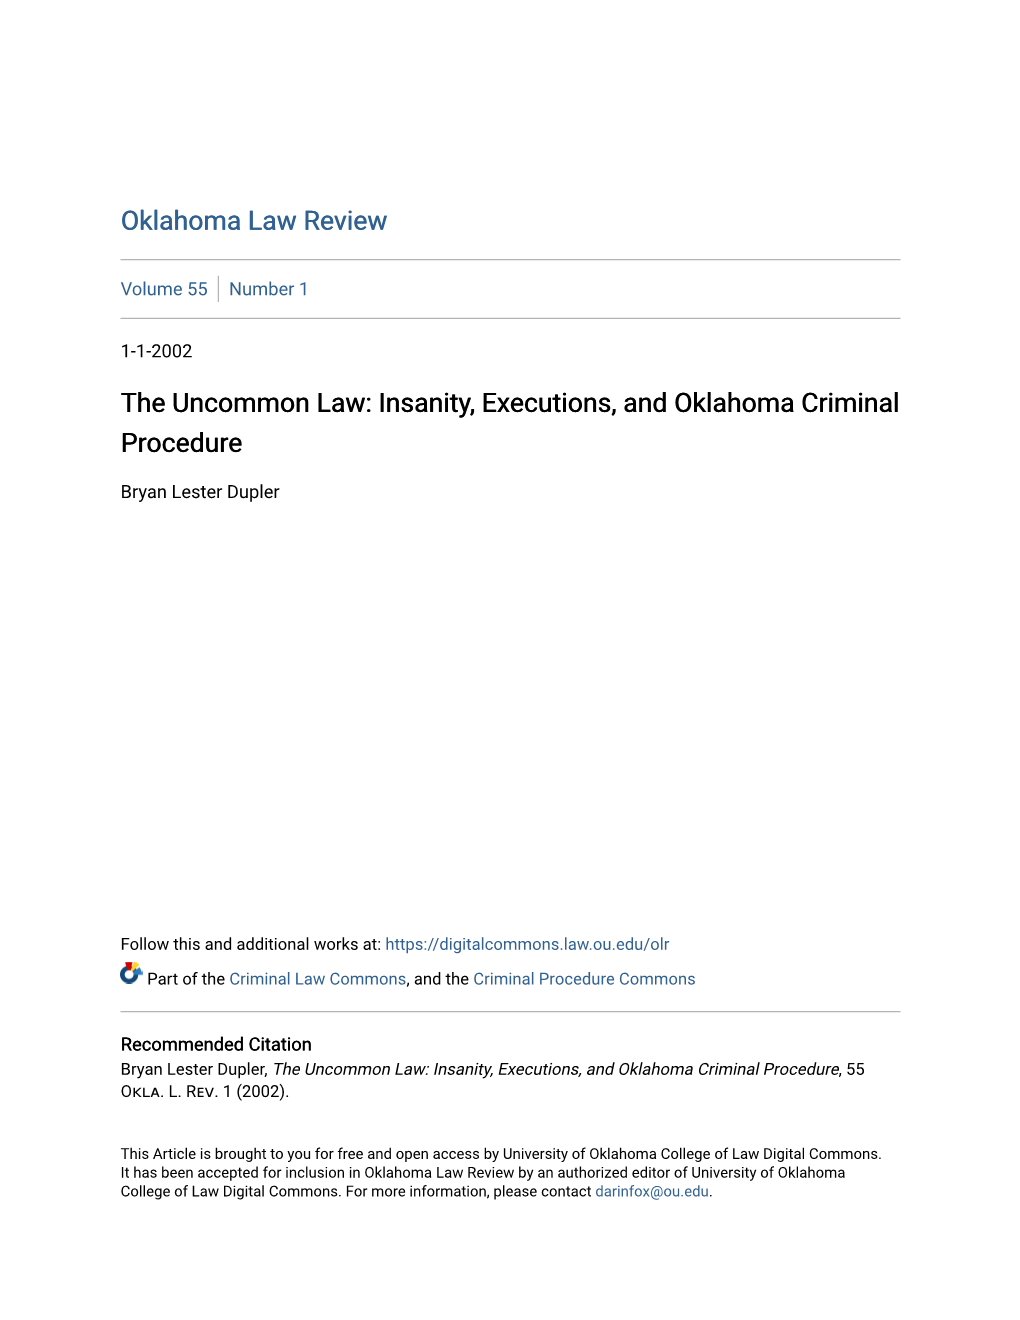 Insanity, Executions, and Oklahoma Criminal Procedure